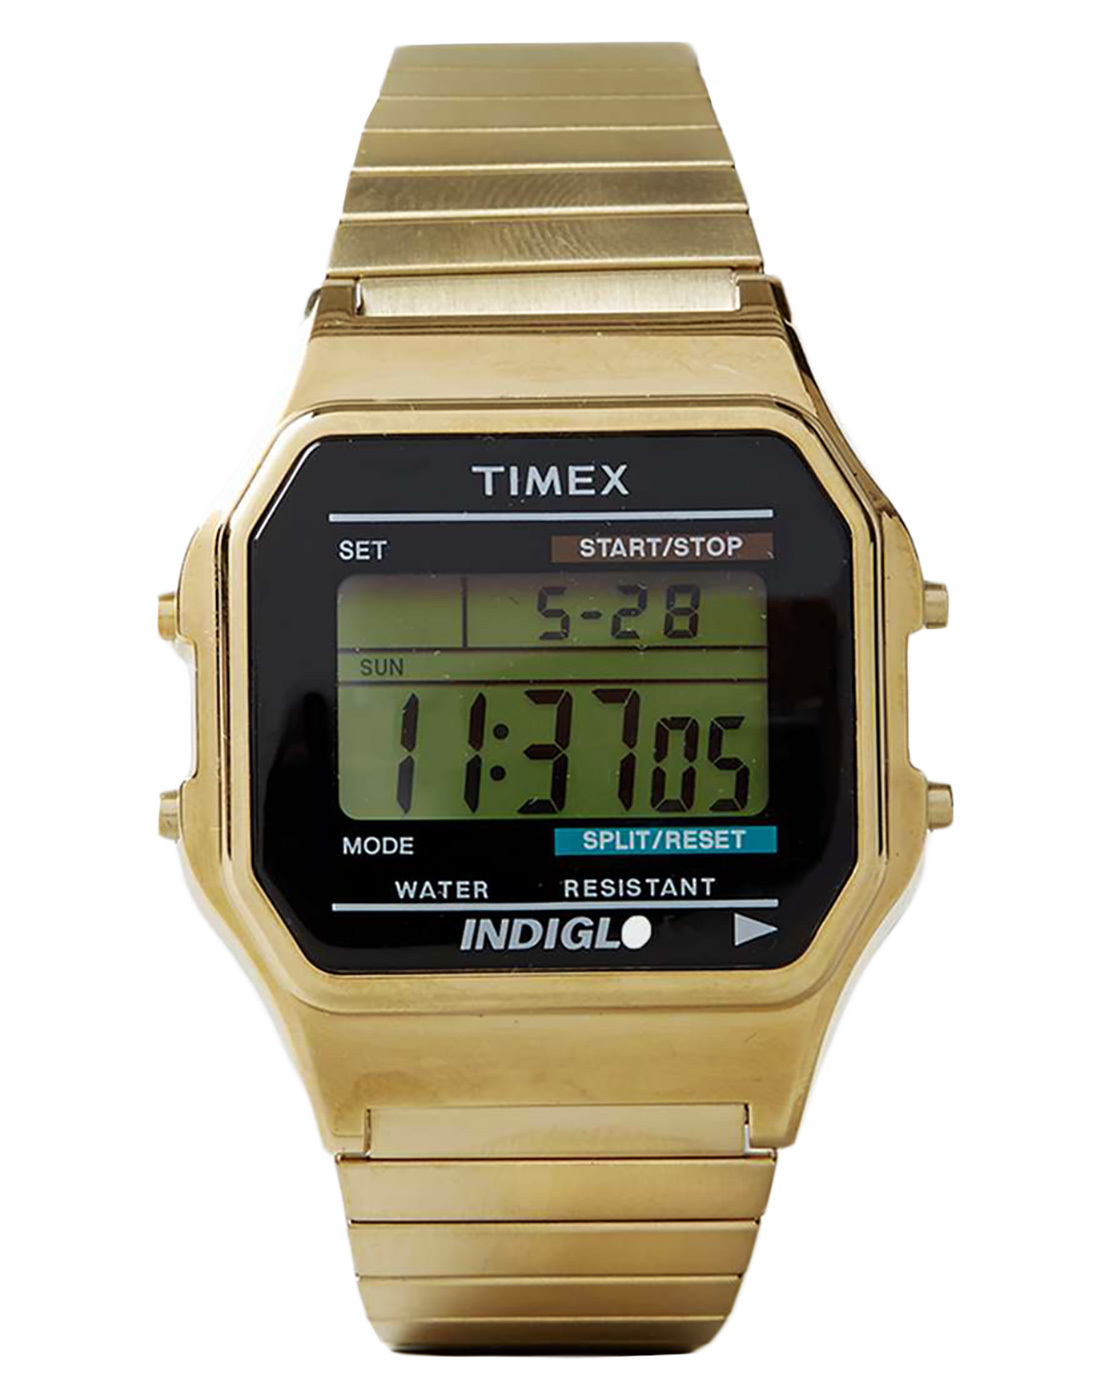 TIMEX 80 Retro Eighties Retro Digital Watch 